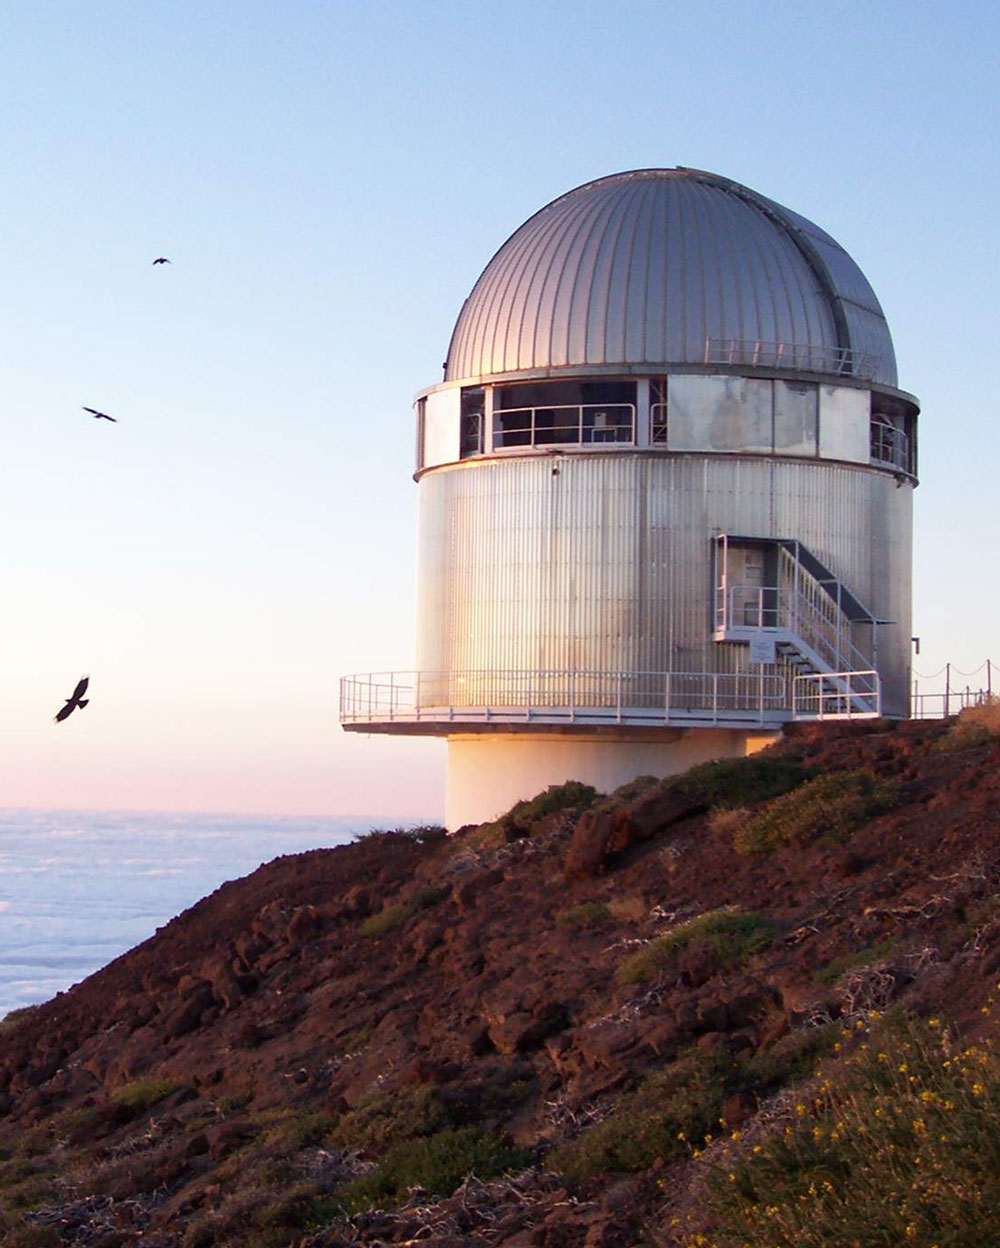 The Nordic Optical Telescope